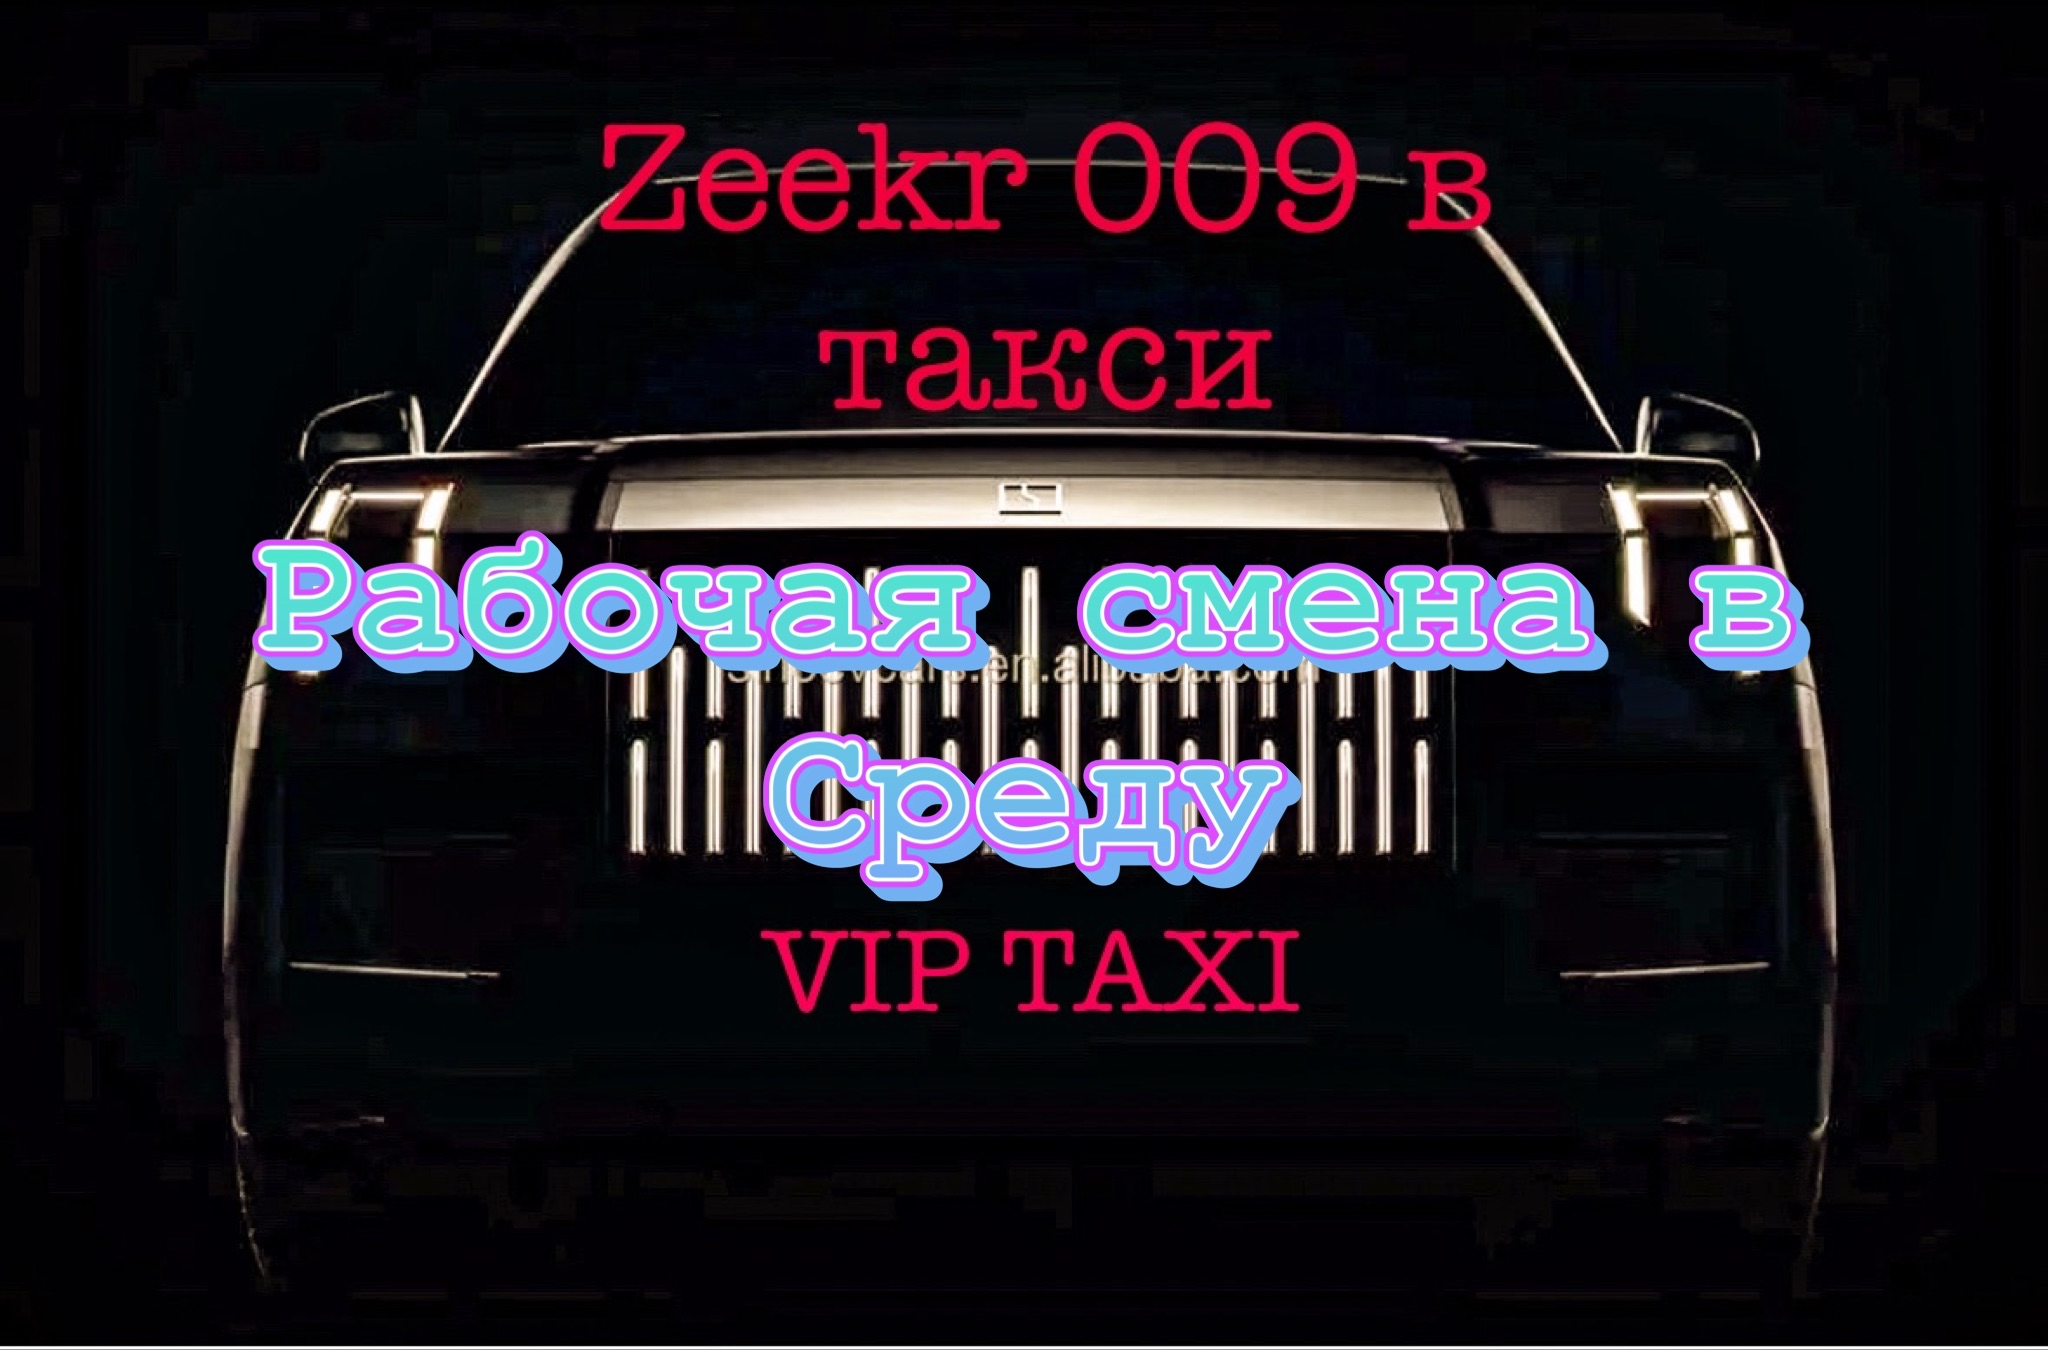 Отличная Среда vip такси /таксую на zeekr009/elite taxi/тариф элит/рабочая смена